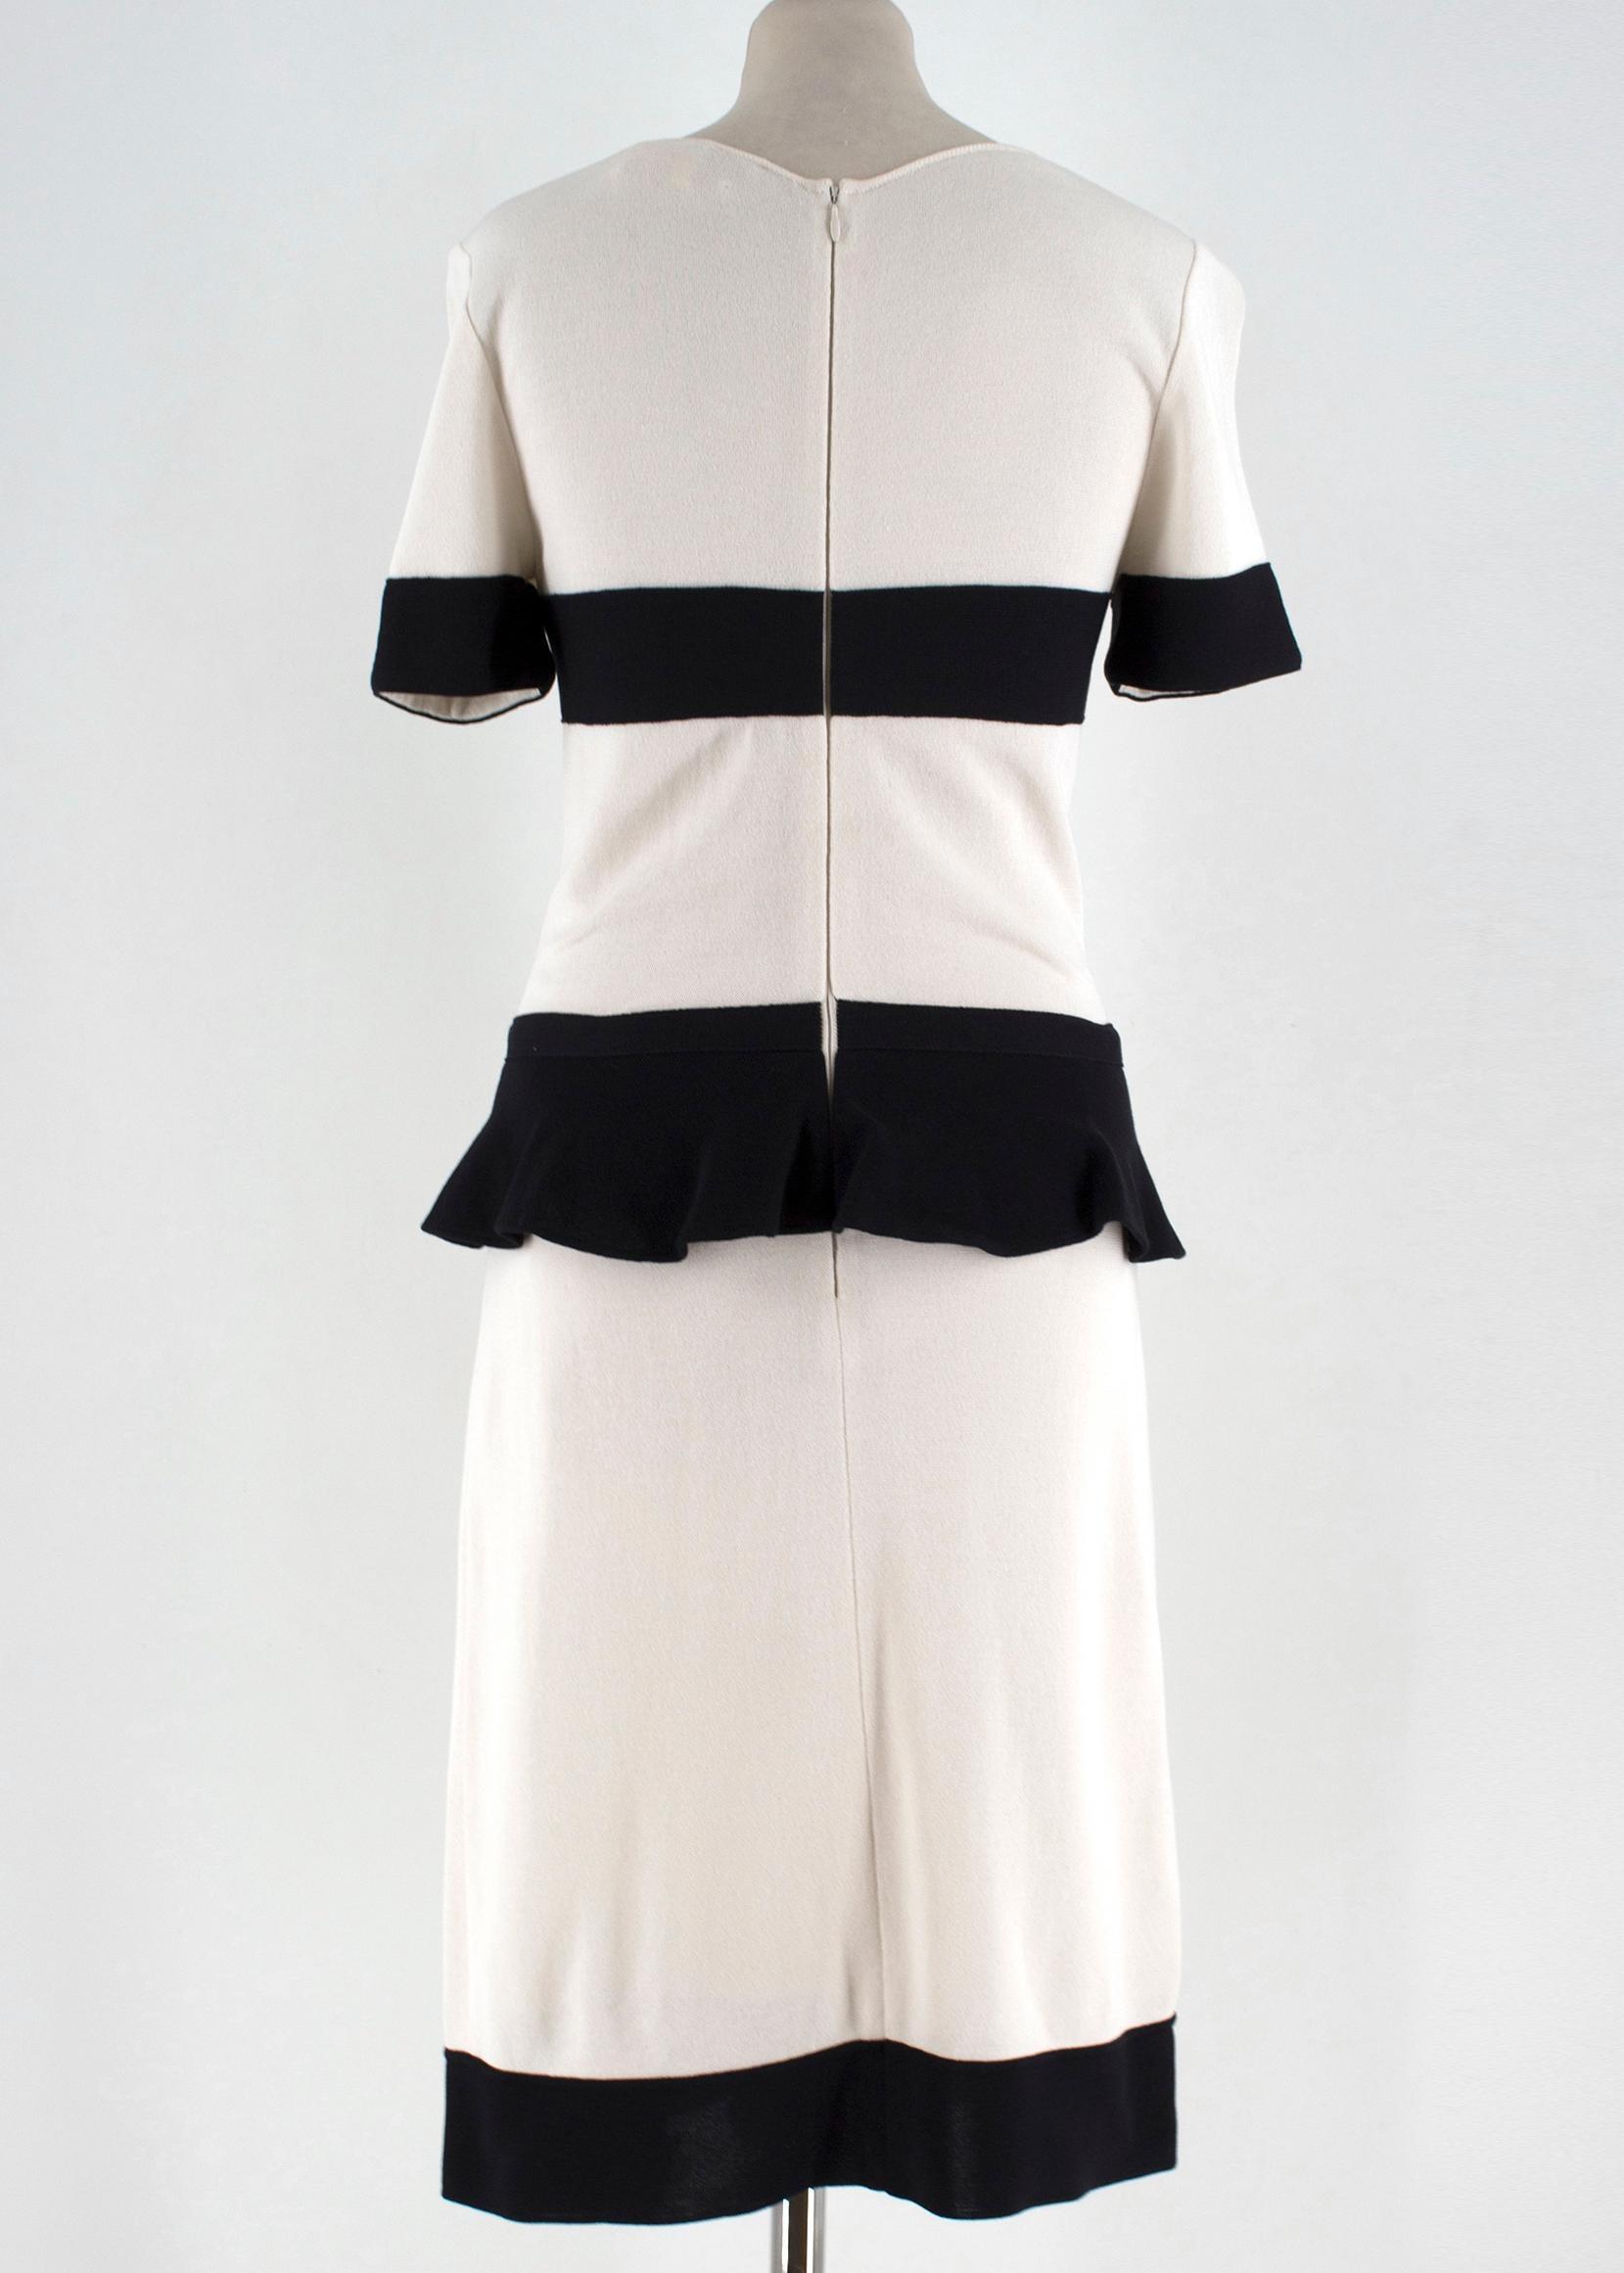 Gray Giambattista Valli Ivory Peplum Dress US 6 For Sale